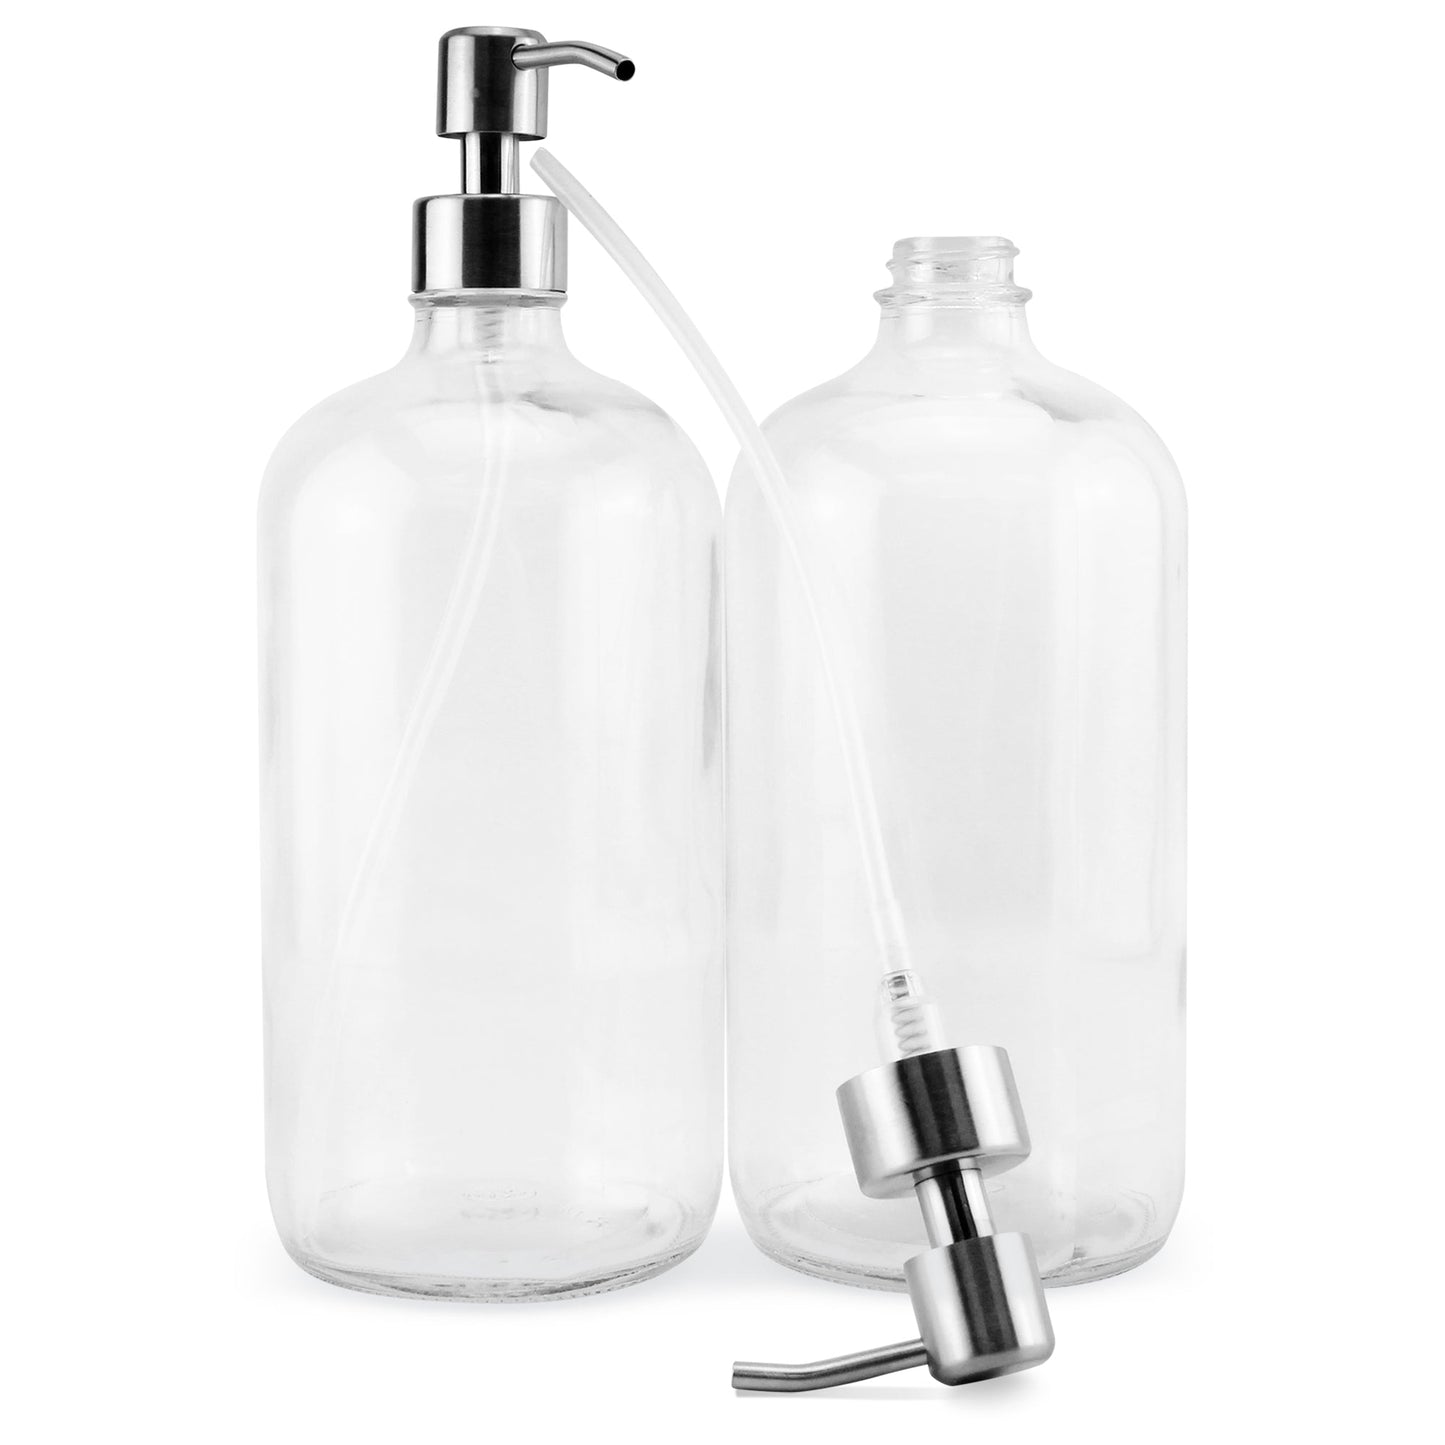 32oz Clear Glass Pump Bottles (2-Pack) - sh1541cb032oz